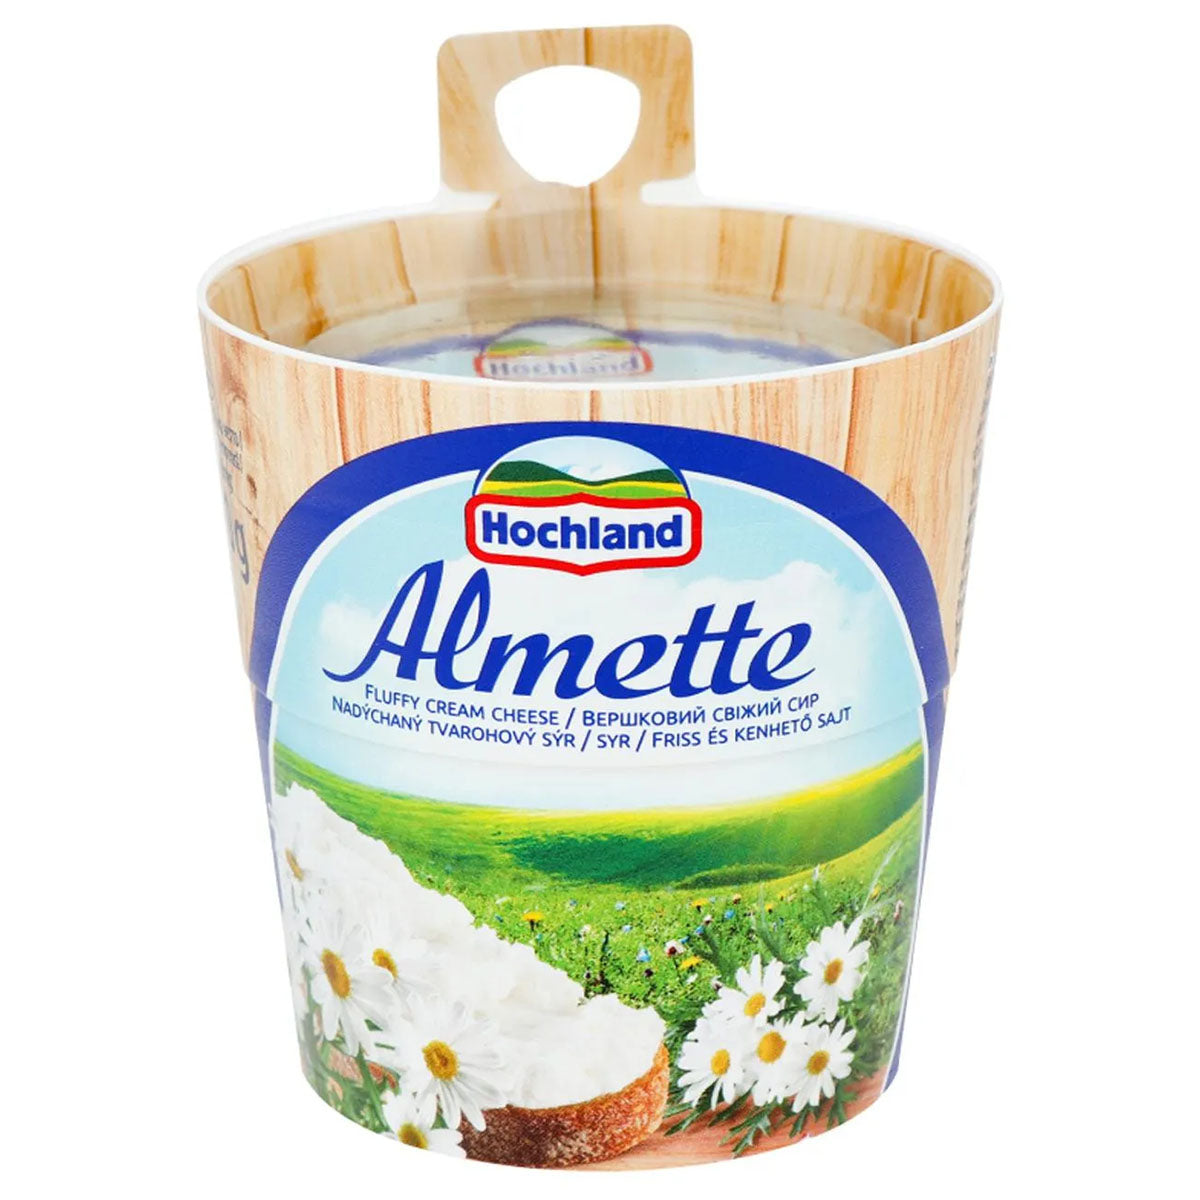 Hochland - Almetta Cream Cheese - 150g - Continental Food Store